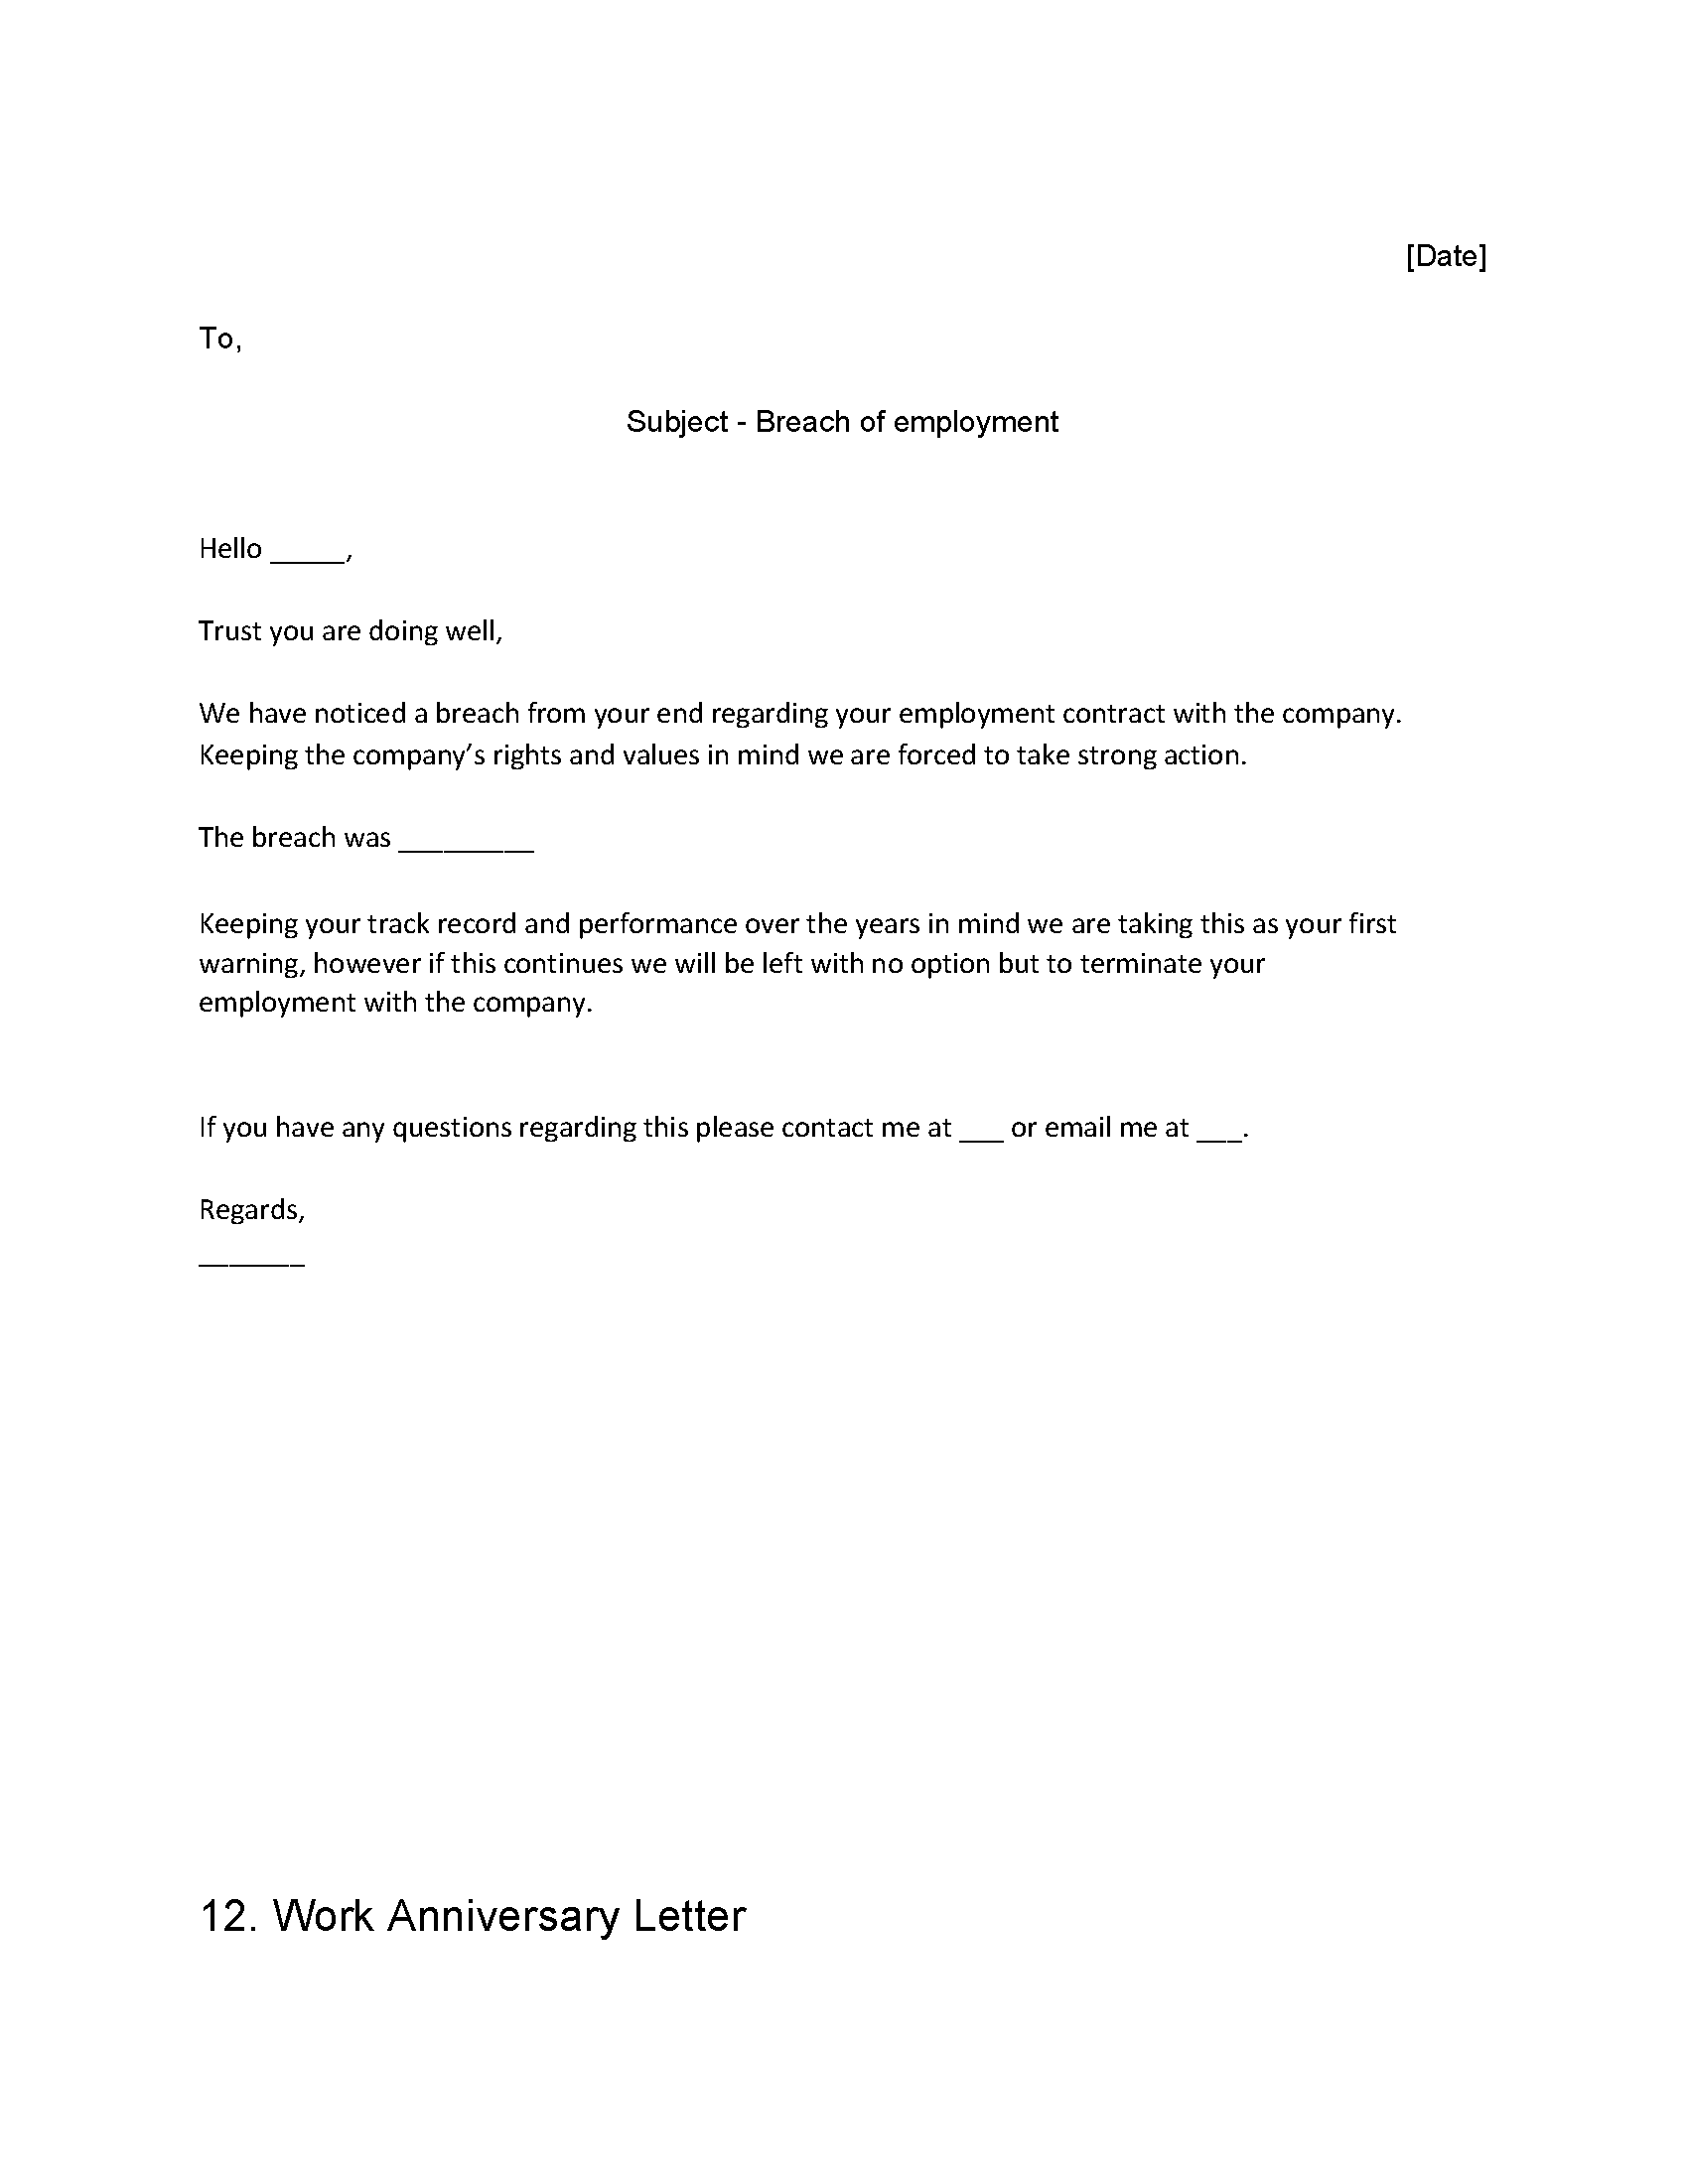 5 - Breach Of Employment Letter